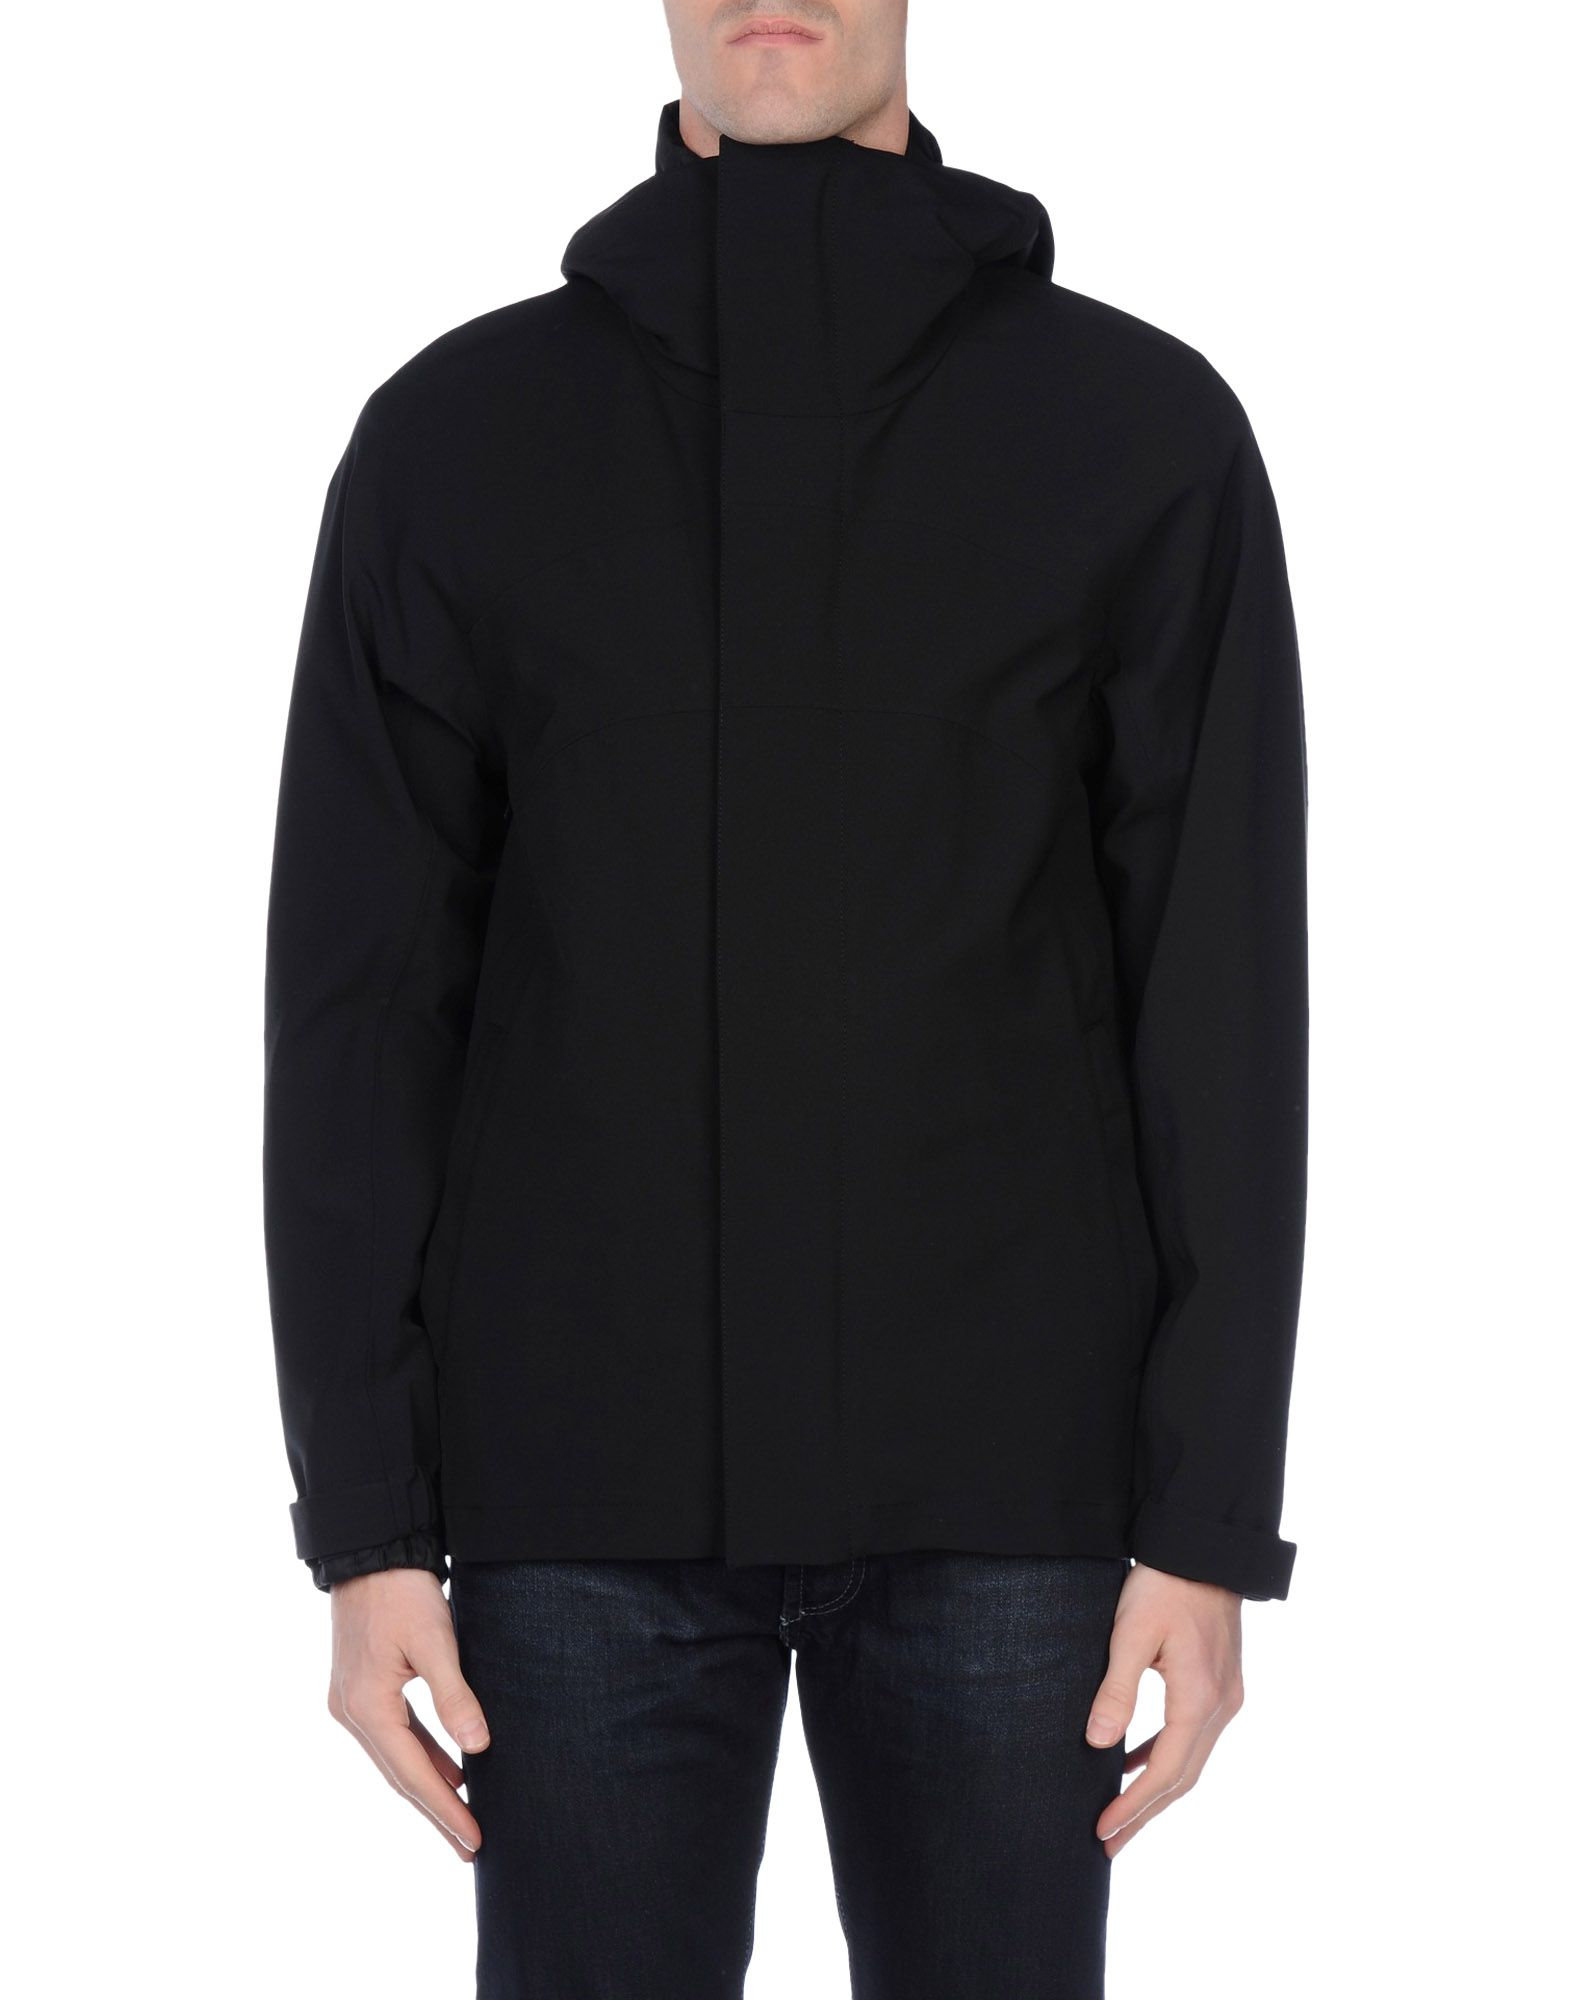 Lyst - Prada Sport Jacket in Black for Men